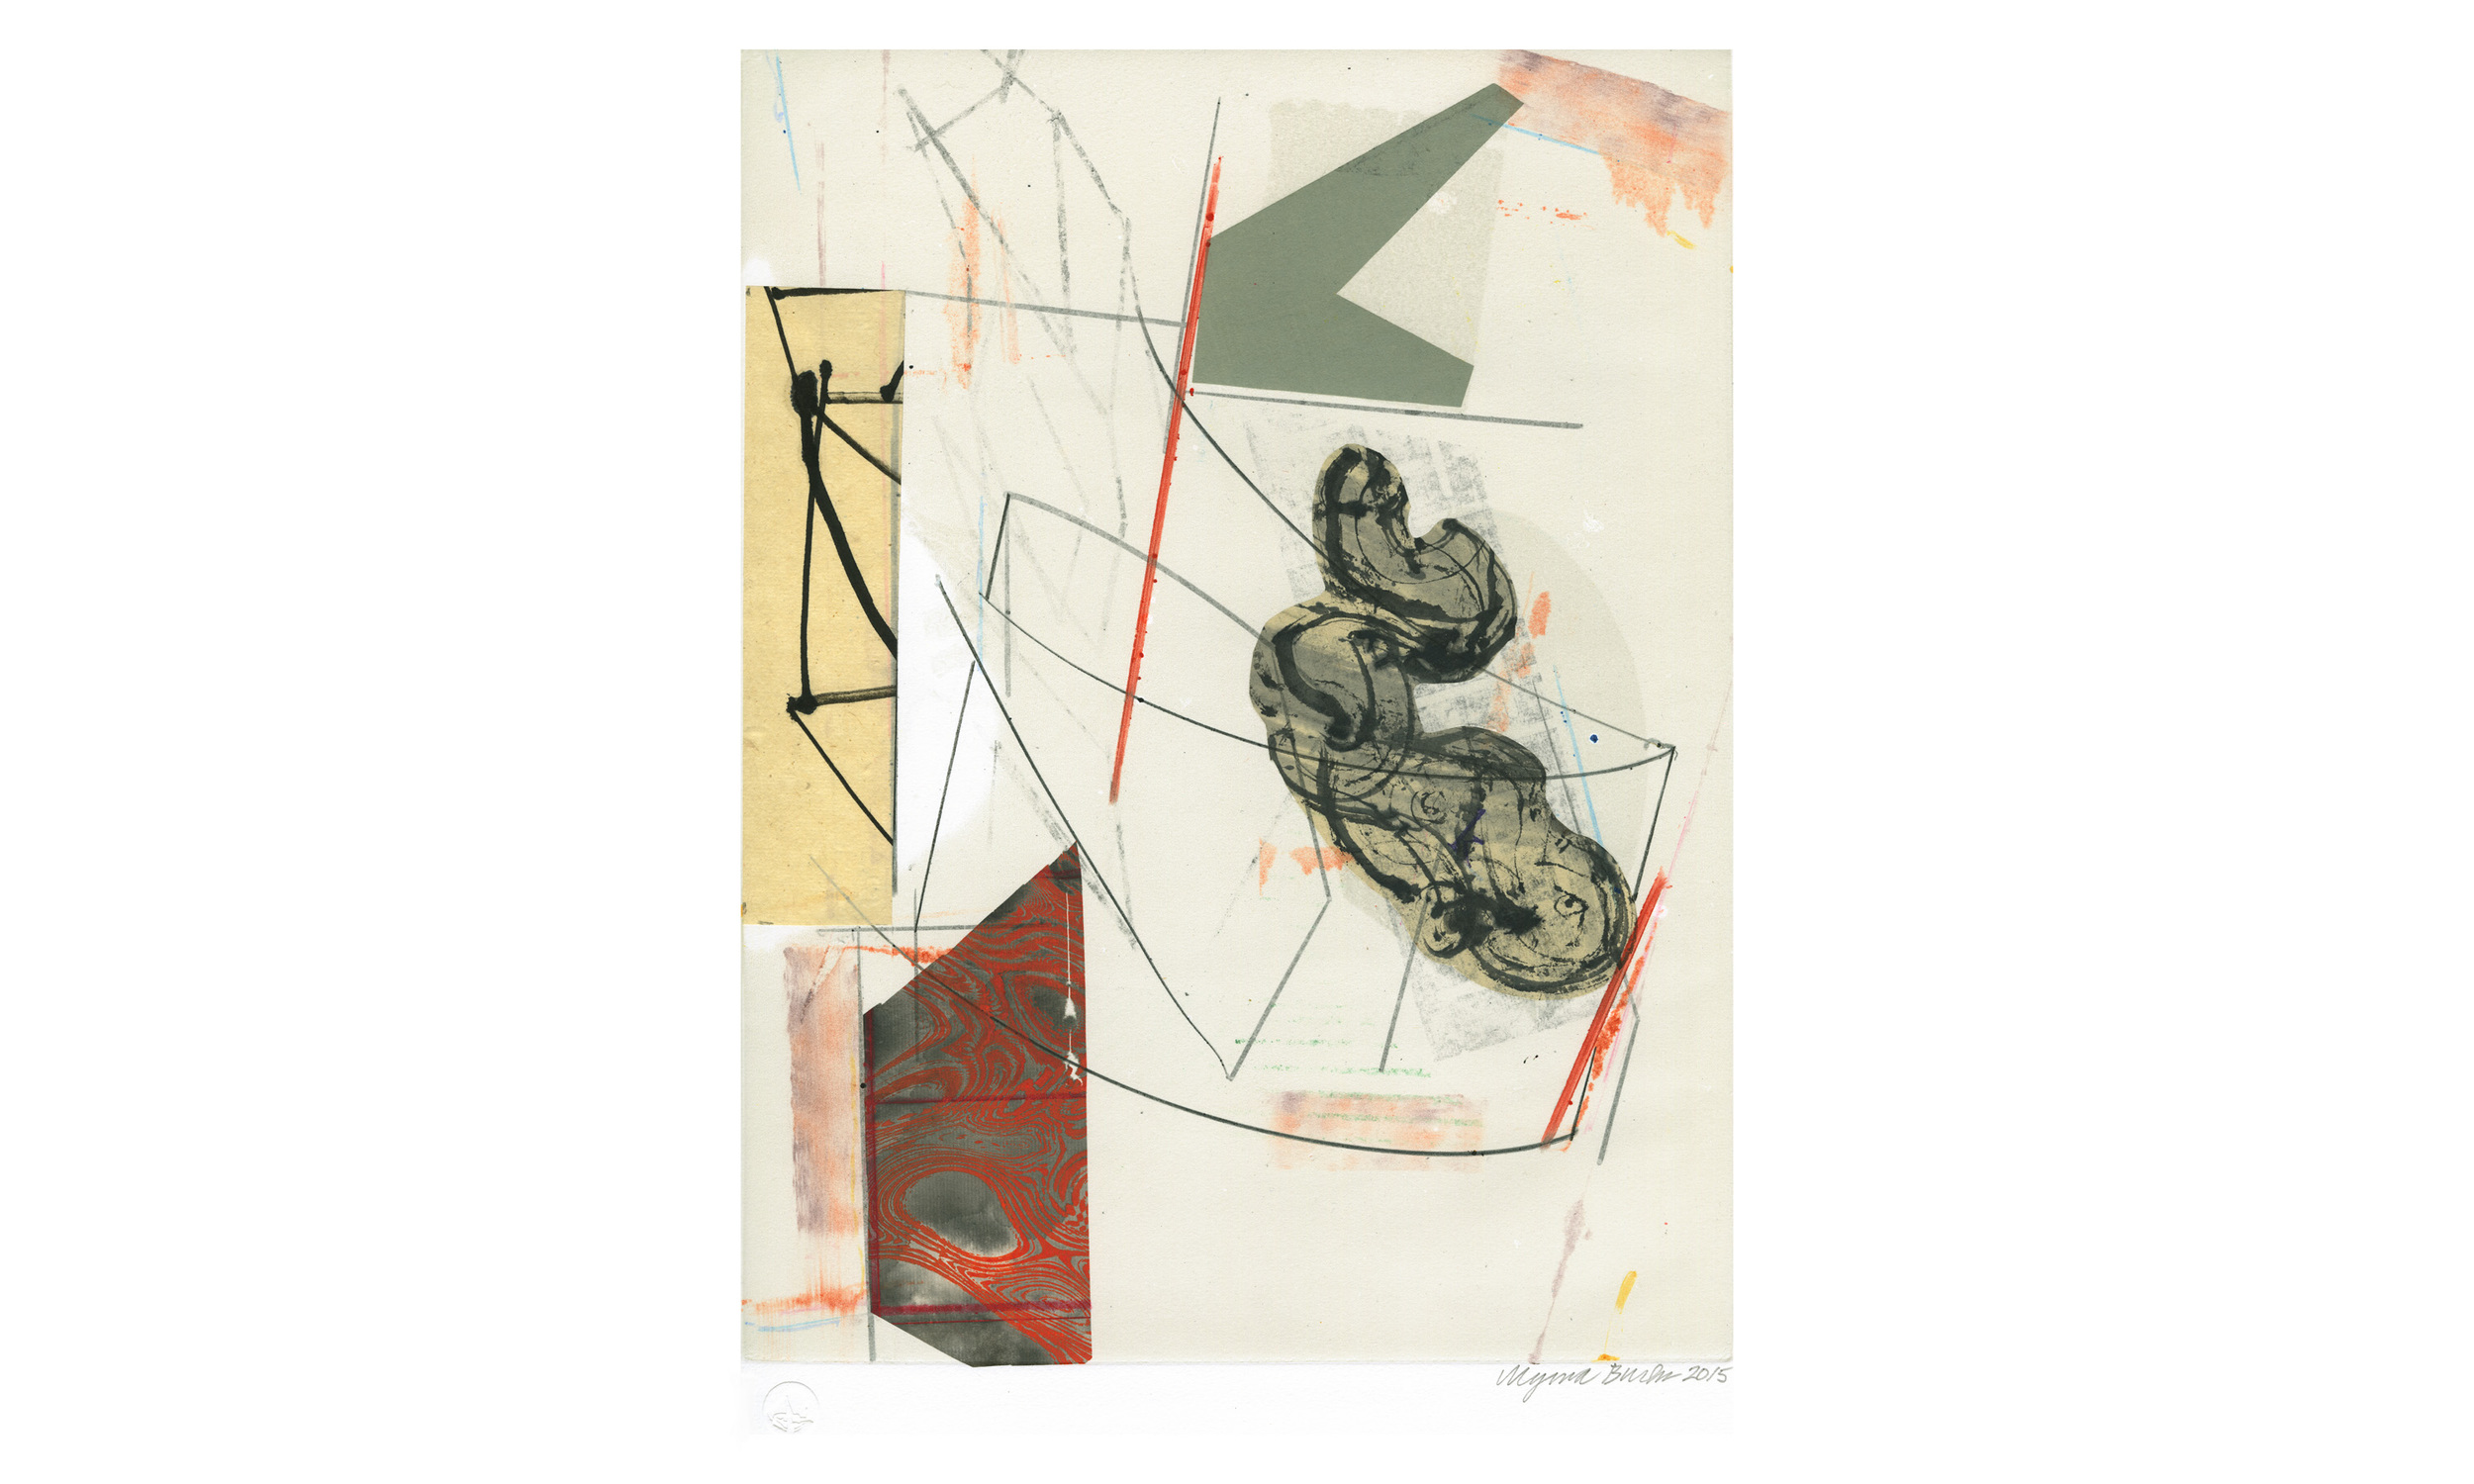 Forbidden Touch, monotype on Somerset rag paper, 25.4" x 18", 2015